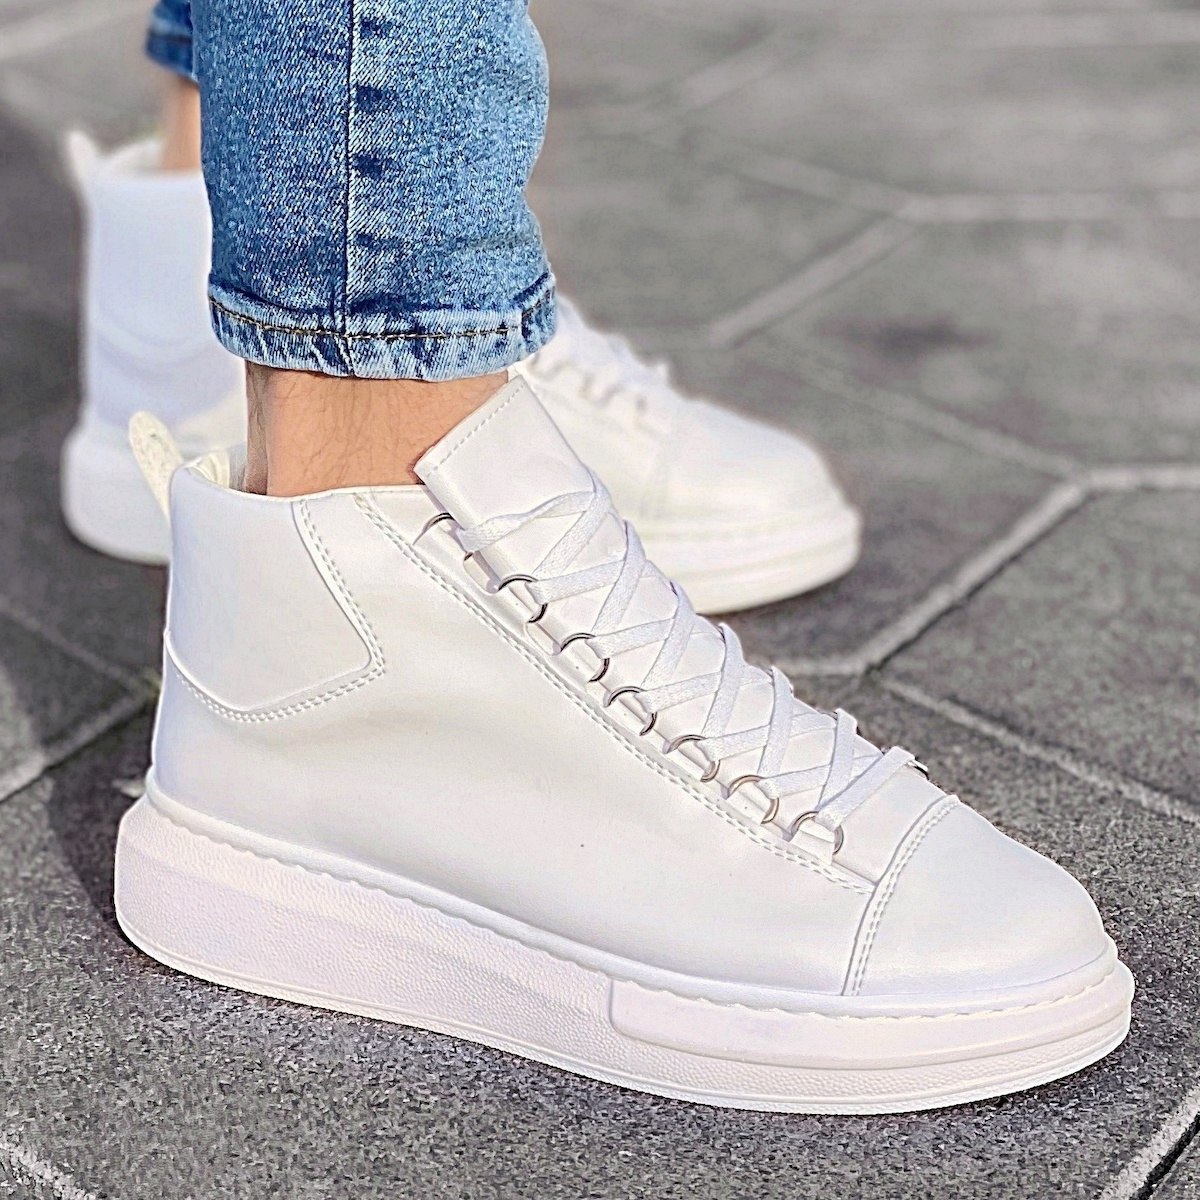 Men’s High Top Sneakers Shoes White | Martin Valen